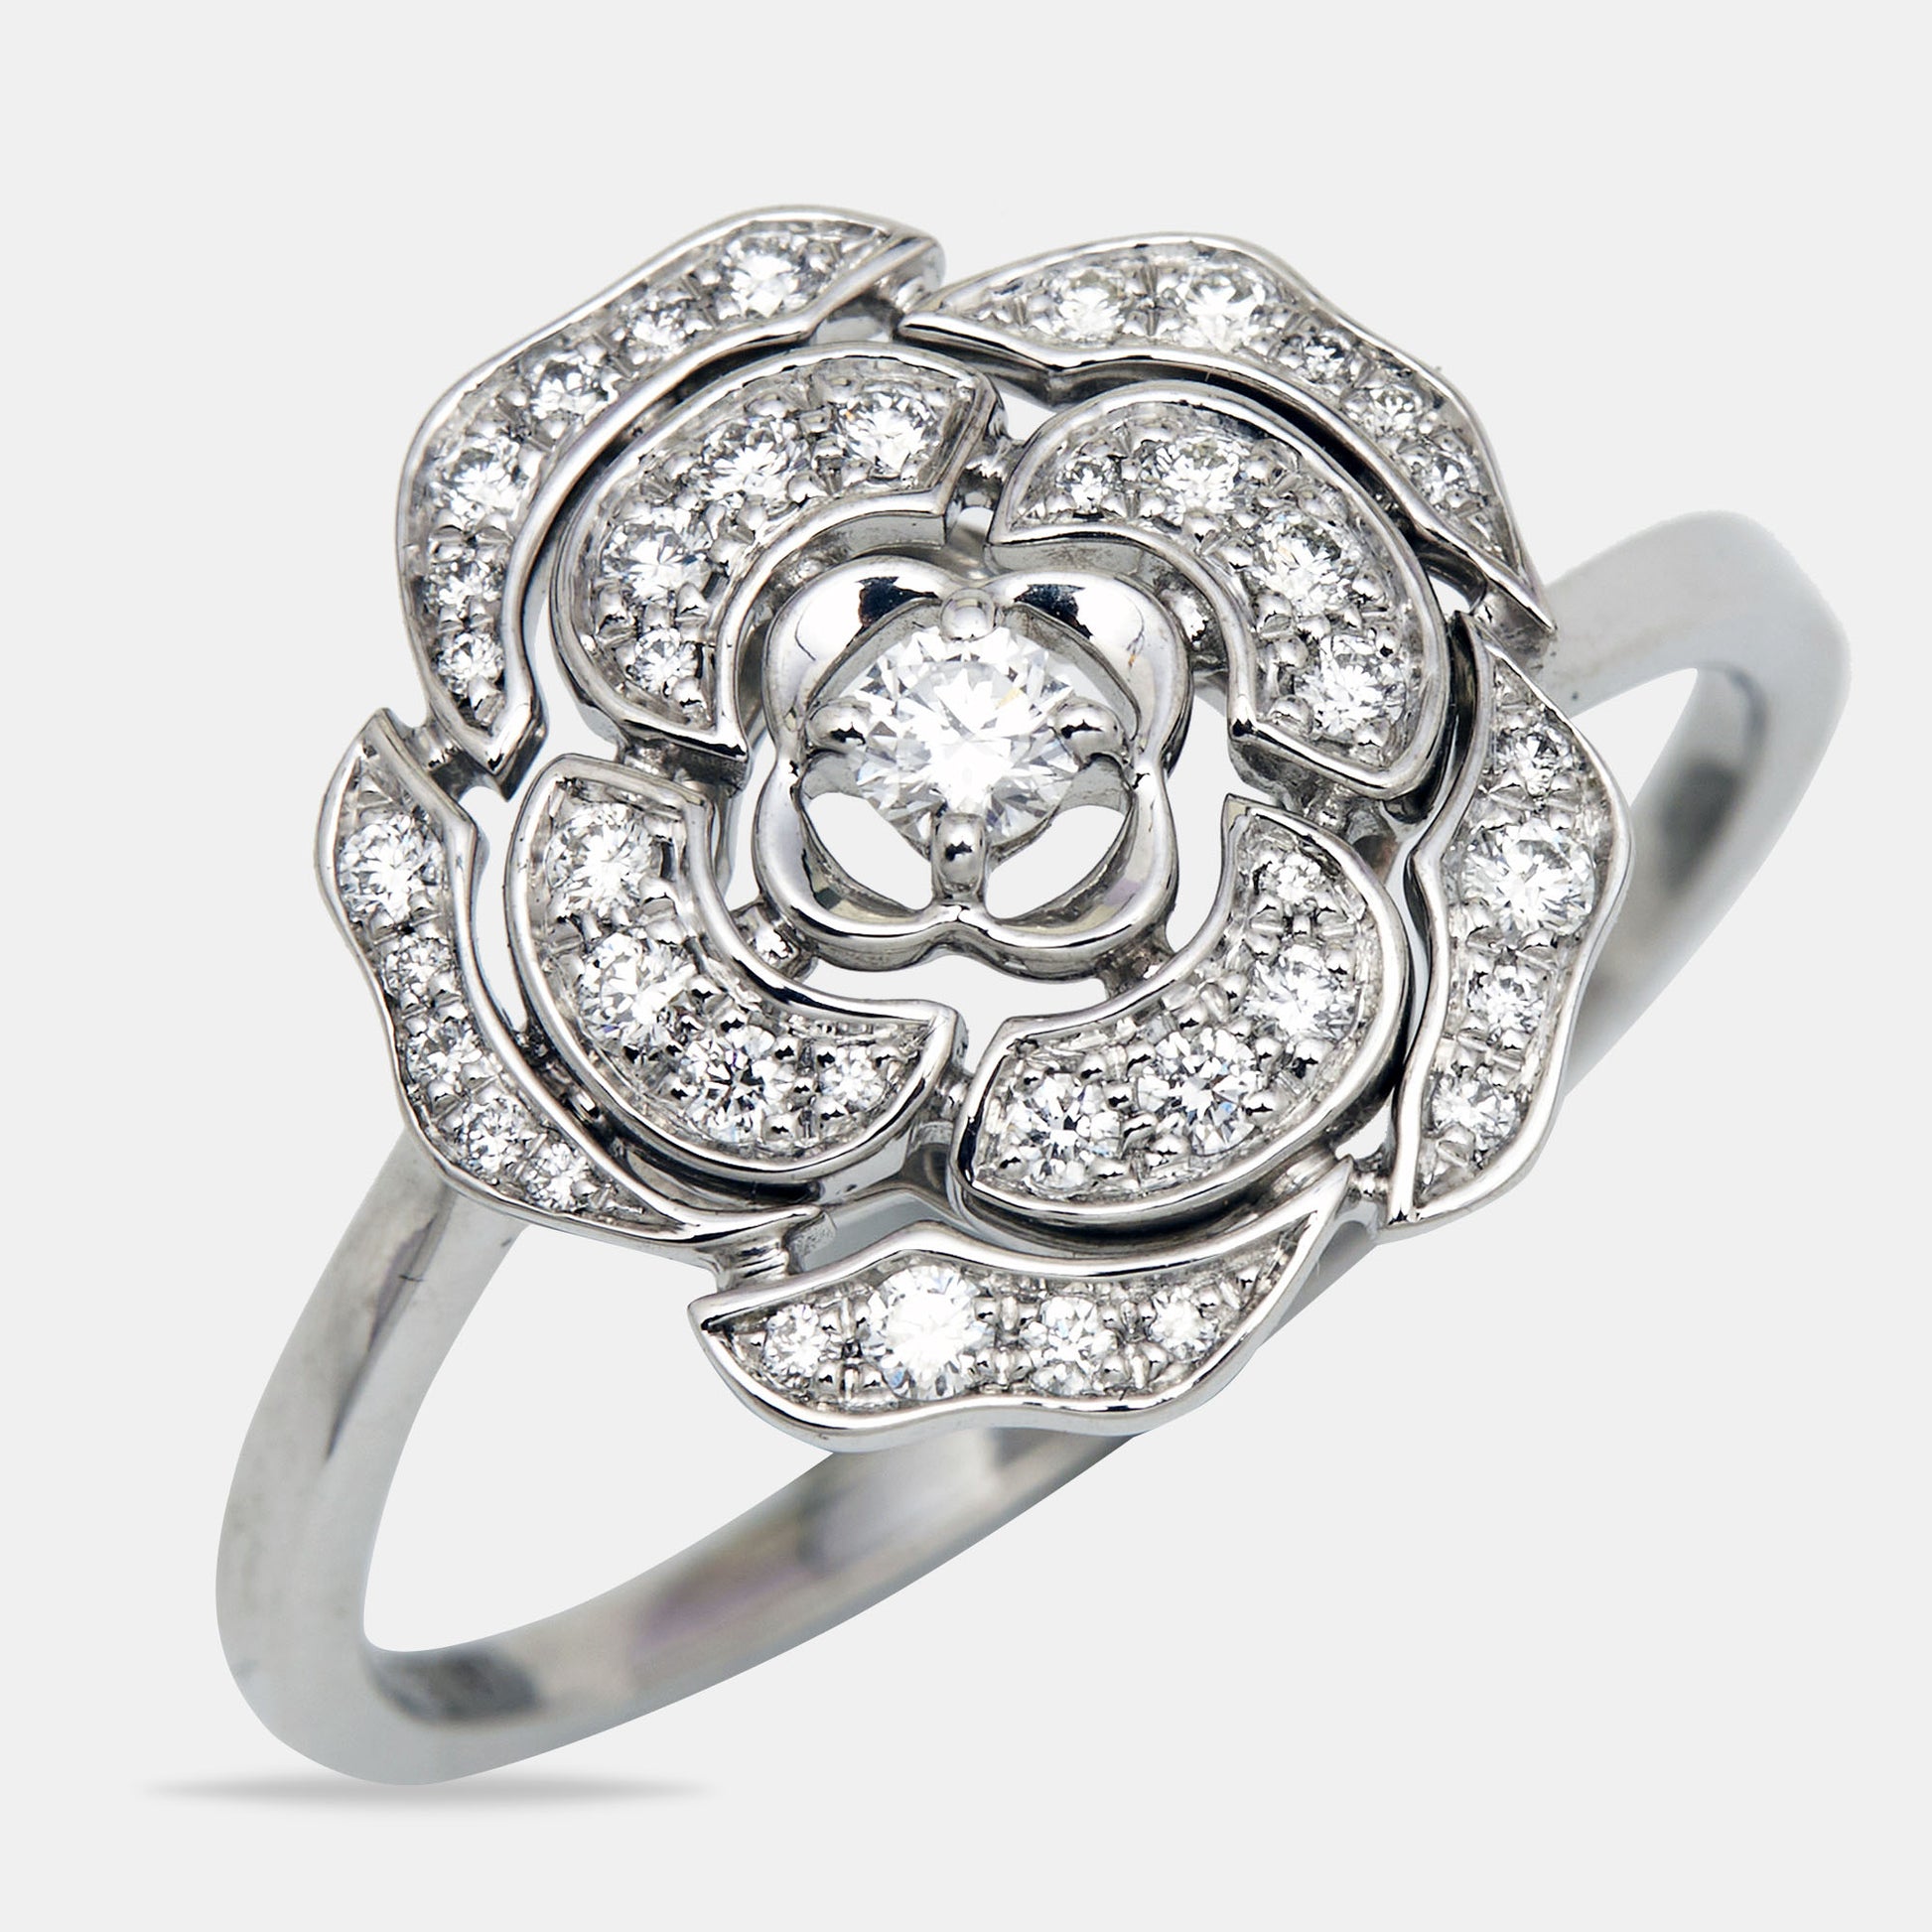 Chanel Bouton de Camelia Diamond Flower 18K White Gold Ring Size 59